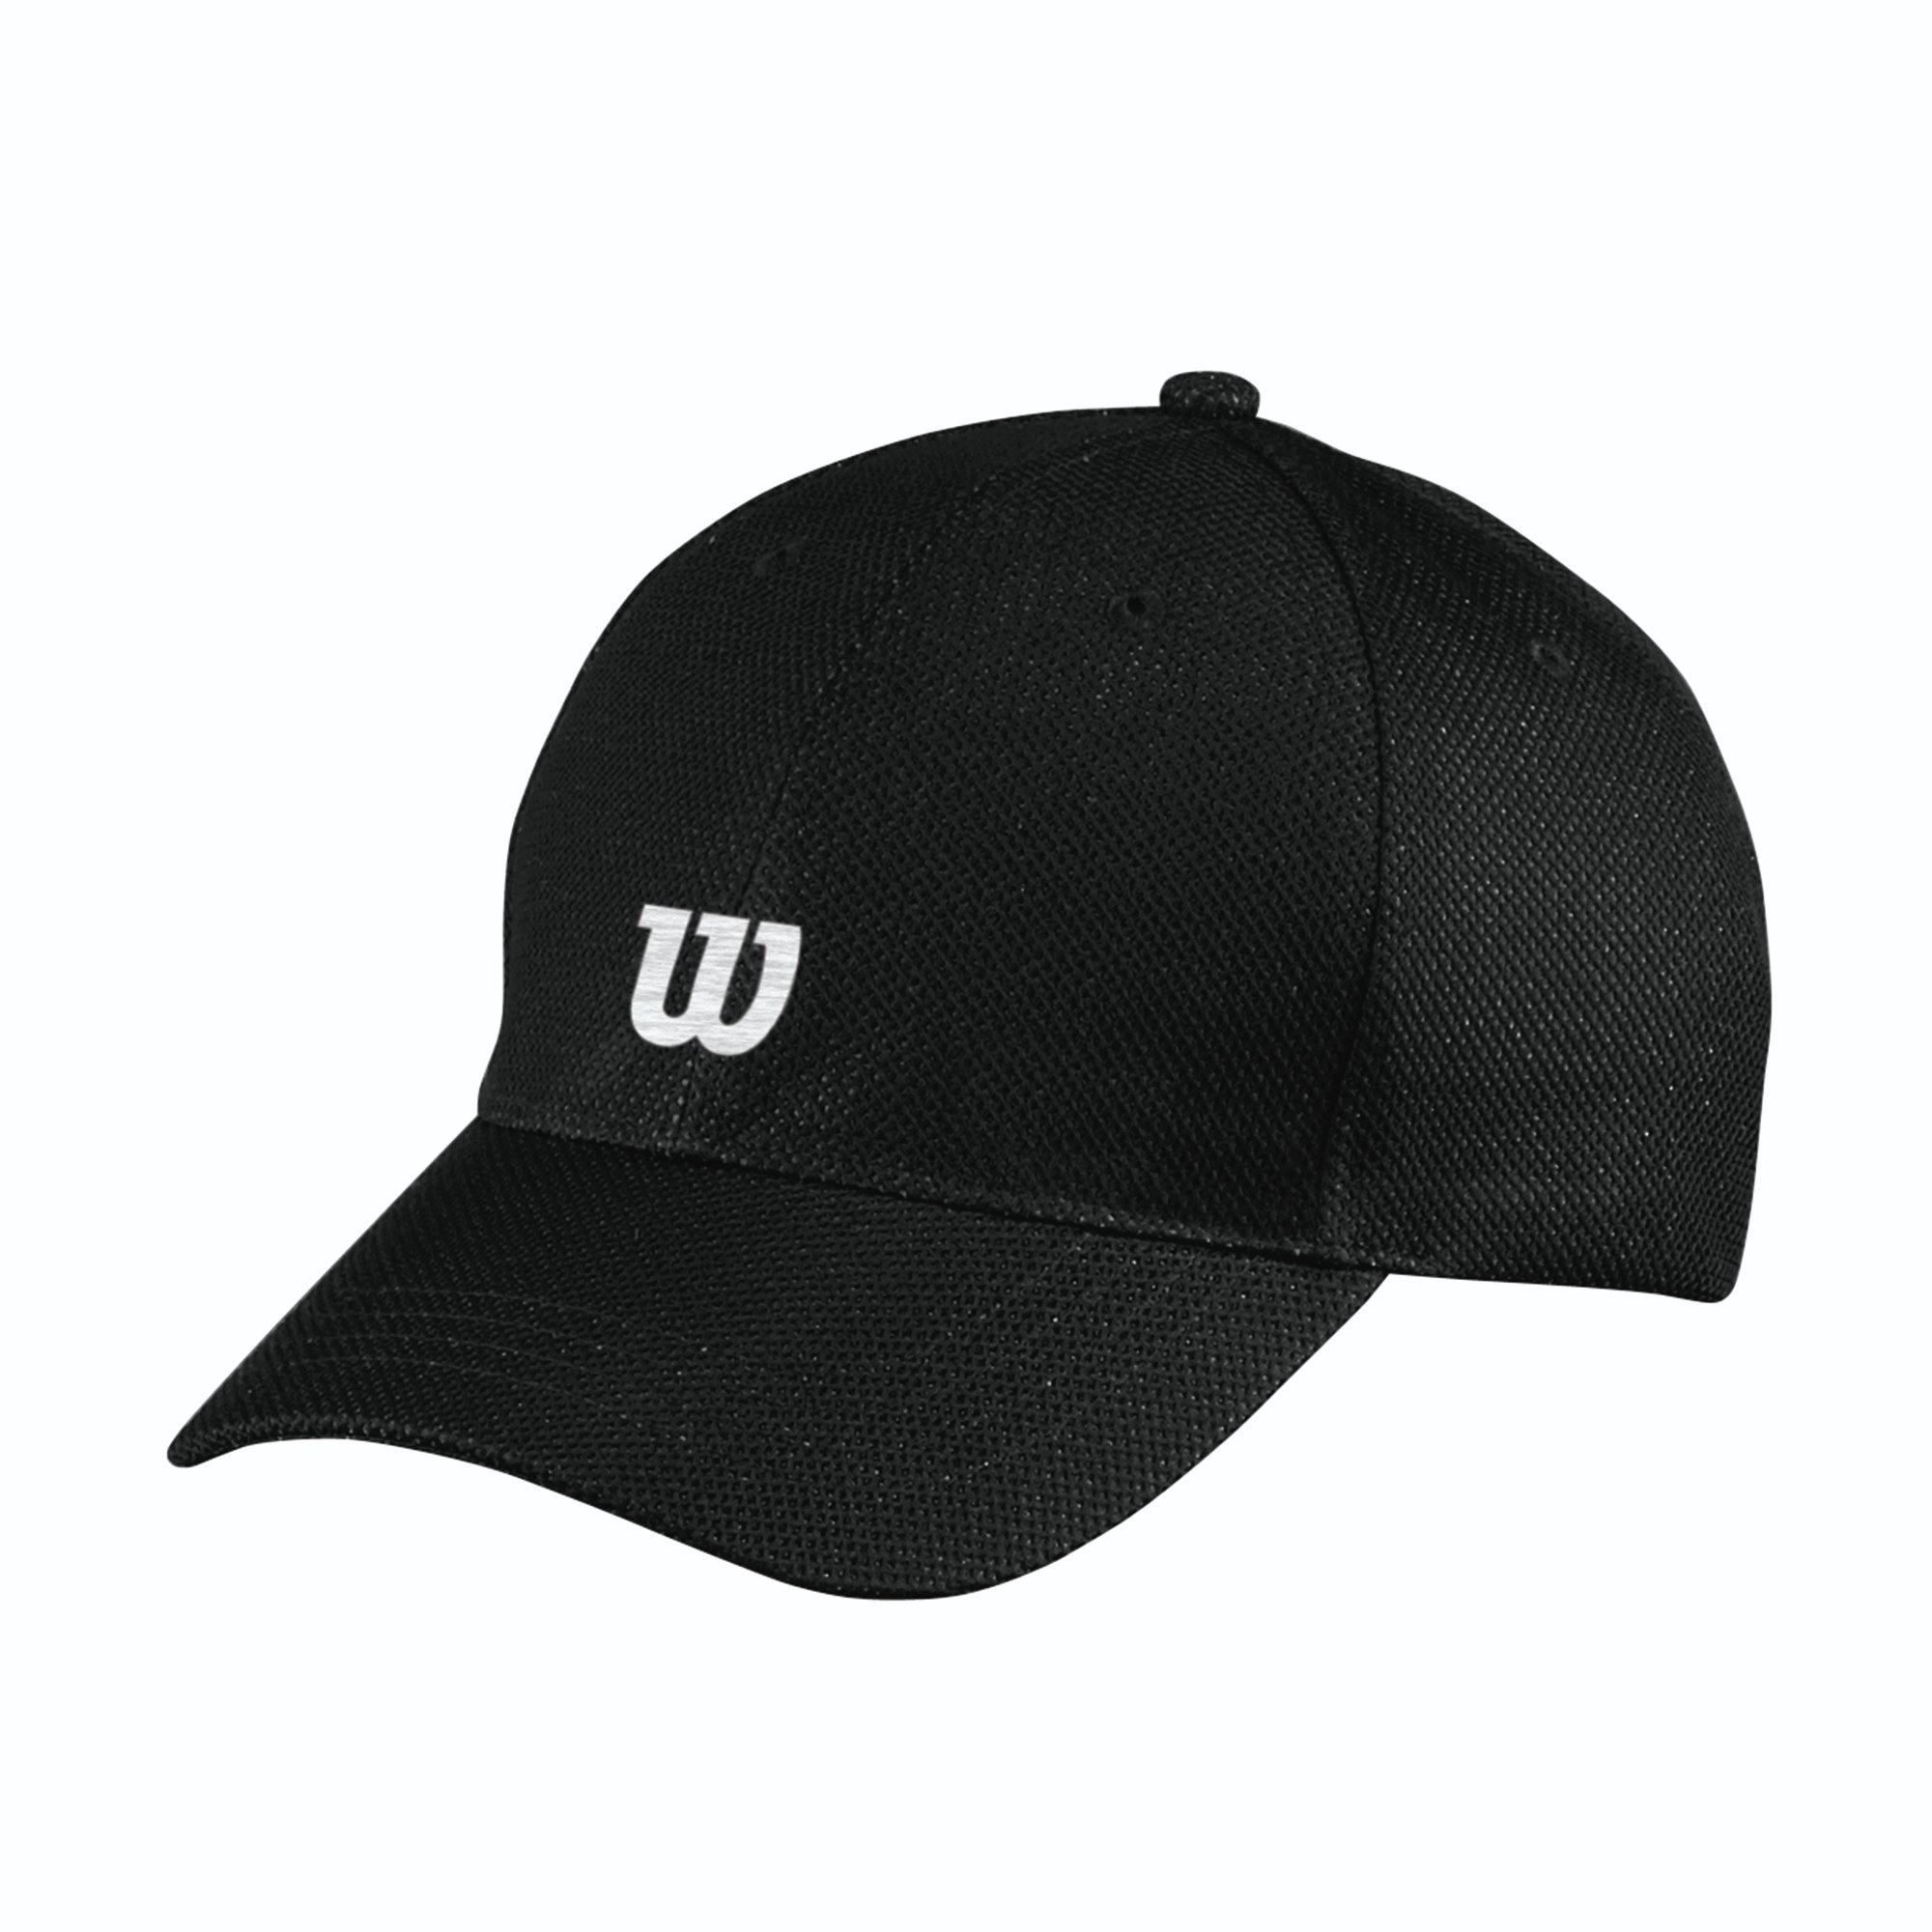 The black baseball cap